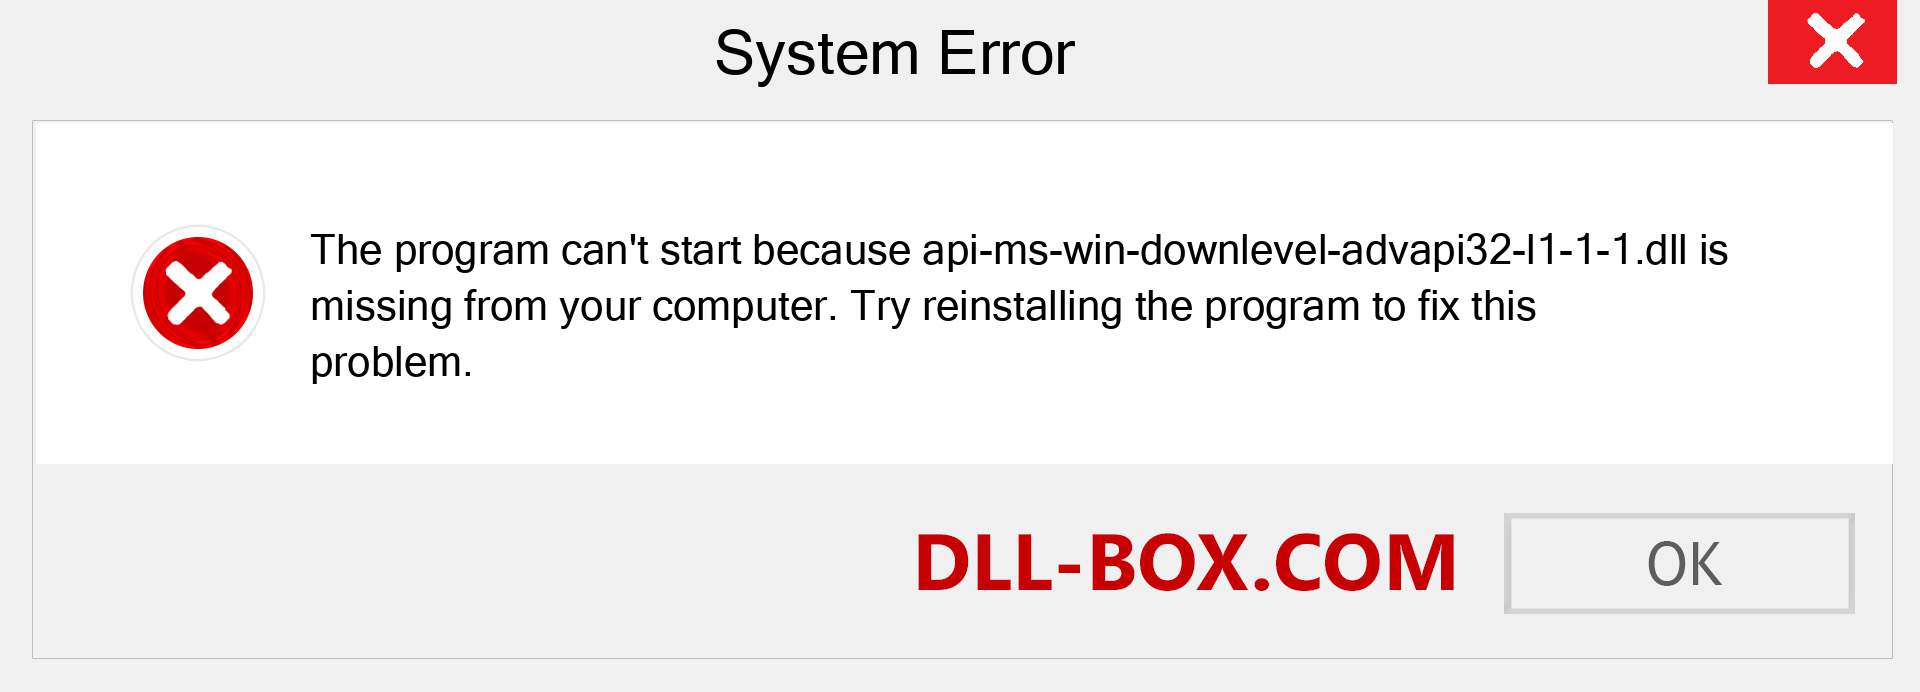  api-ms-win-downlevel-advapi32-l1-1-1.dll file is missing?. Download for Windows 7, 8, 10 - Fix  api-ms-win-downlevel-advapi32-l1-1-1 dll Missing Error on Windows, photos, images